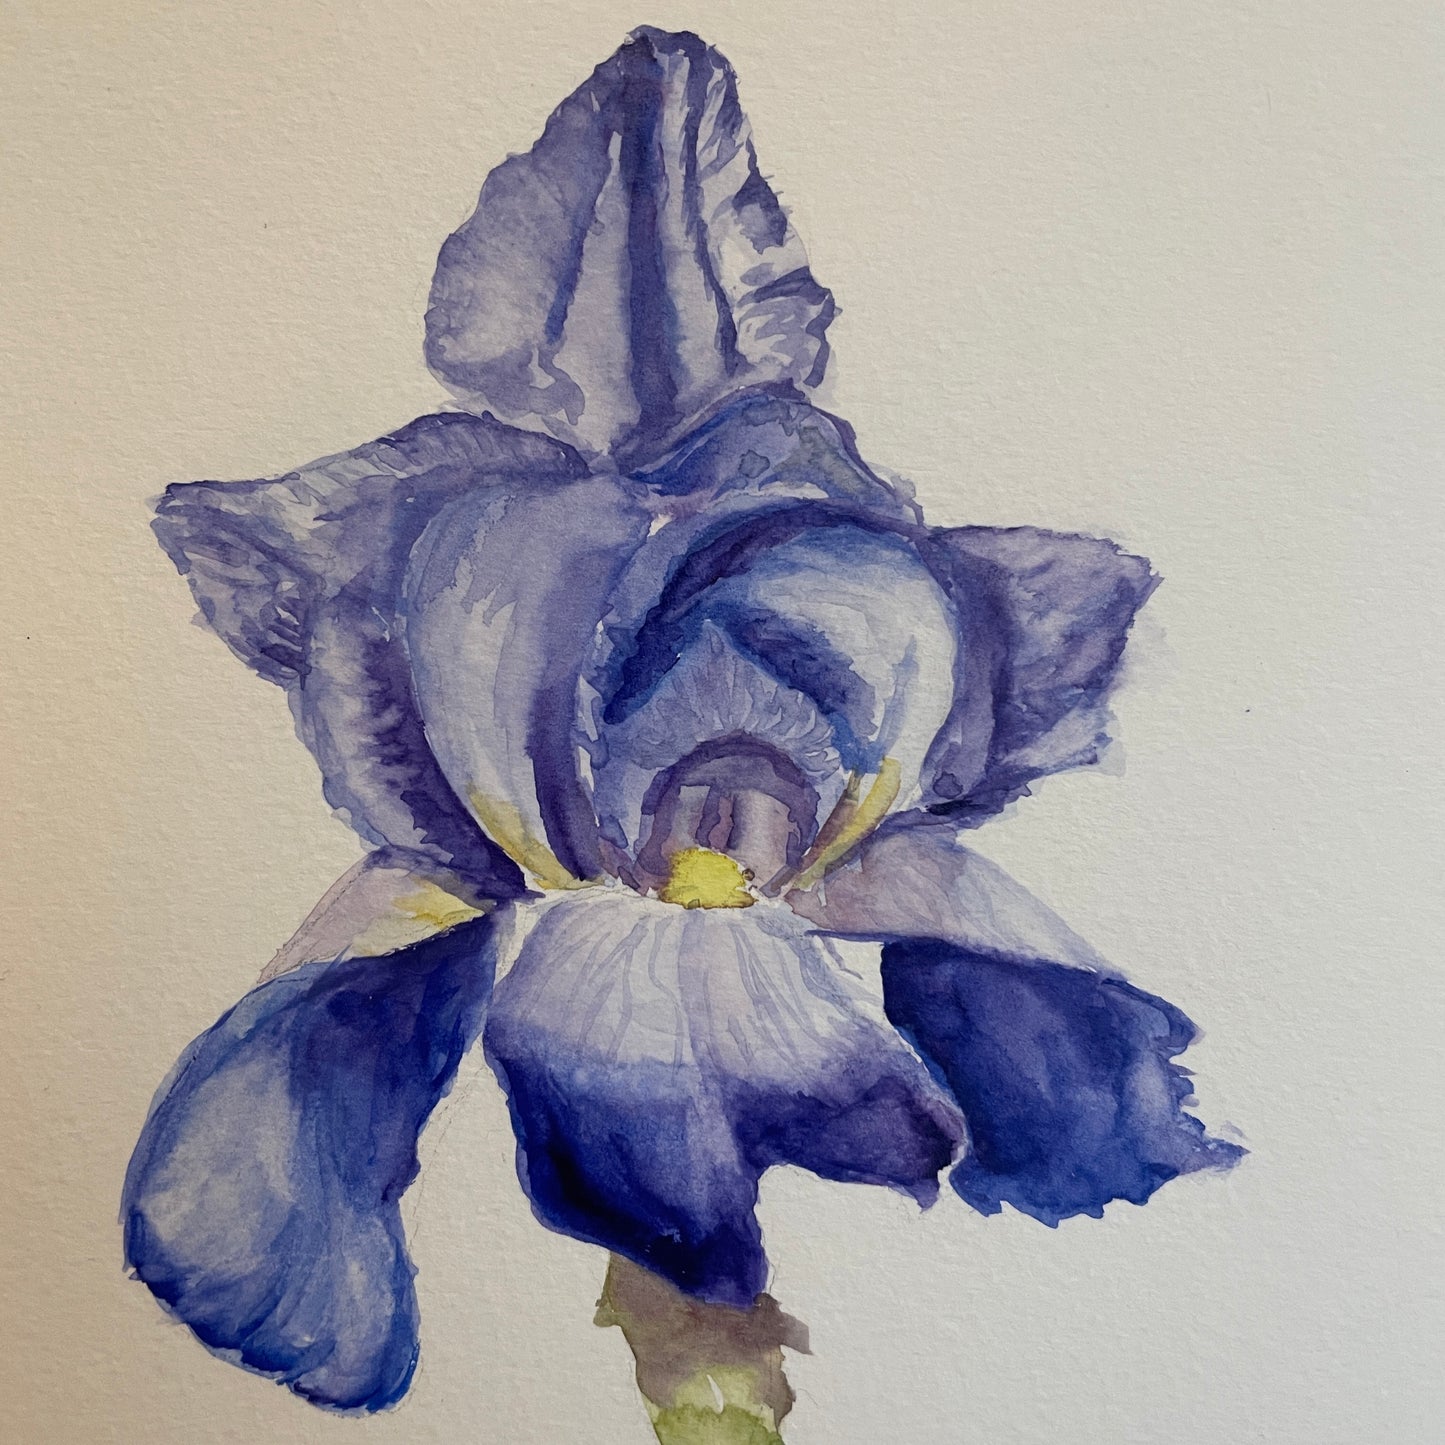 Purple Iris: Unfolding